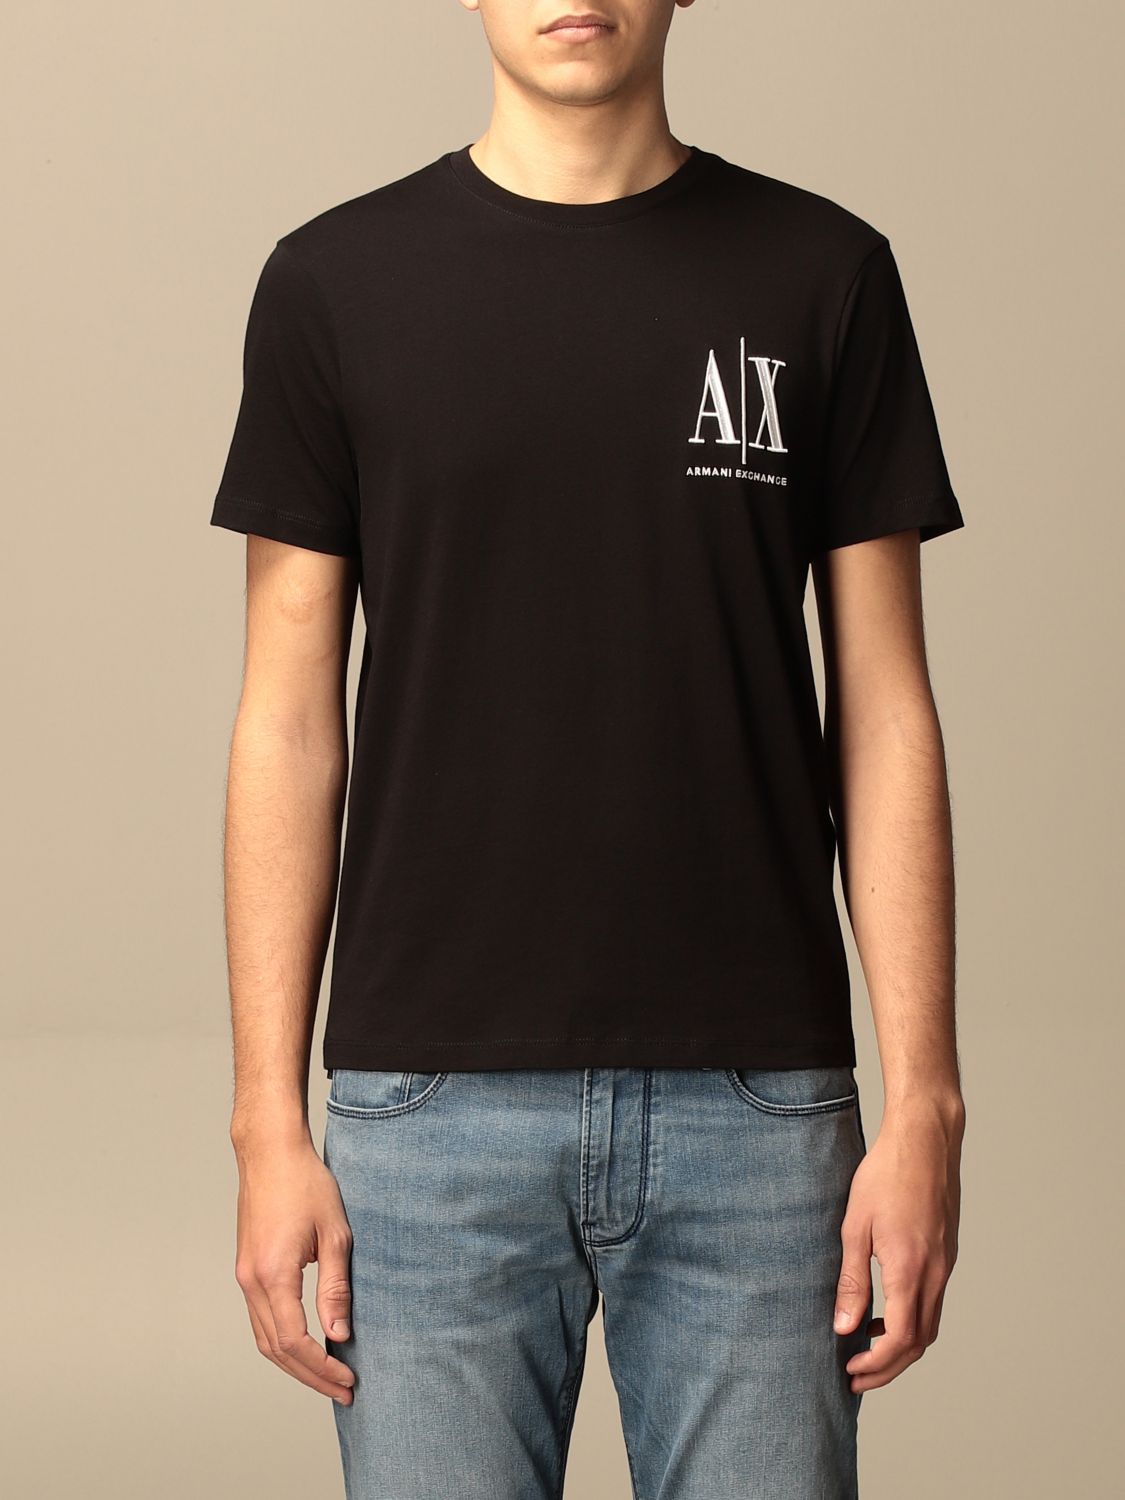 ARMANI EXCHANGE: T-shirt with logo - Black | ARMANI EXCHANGE t-shirt ...